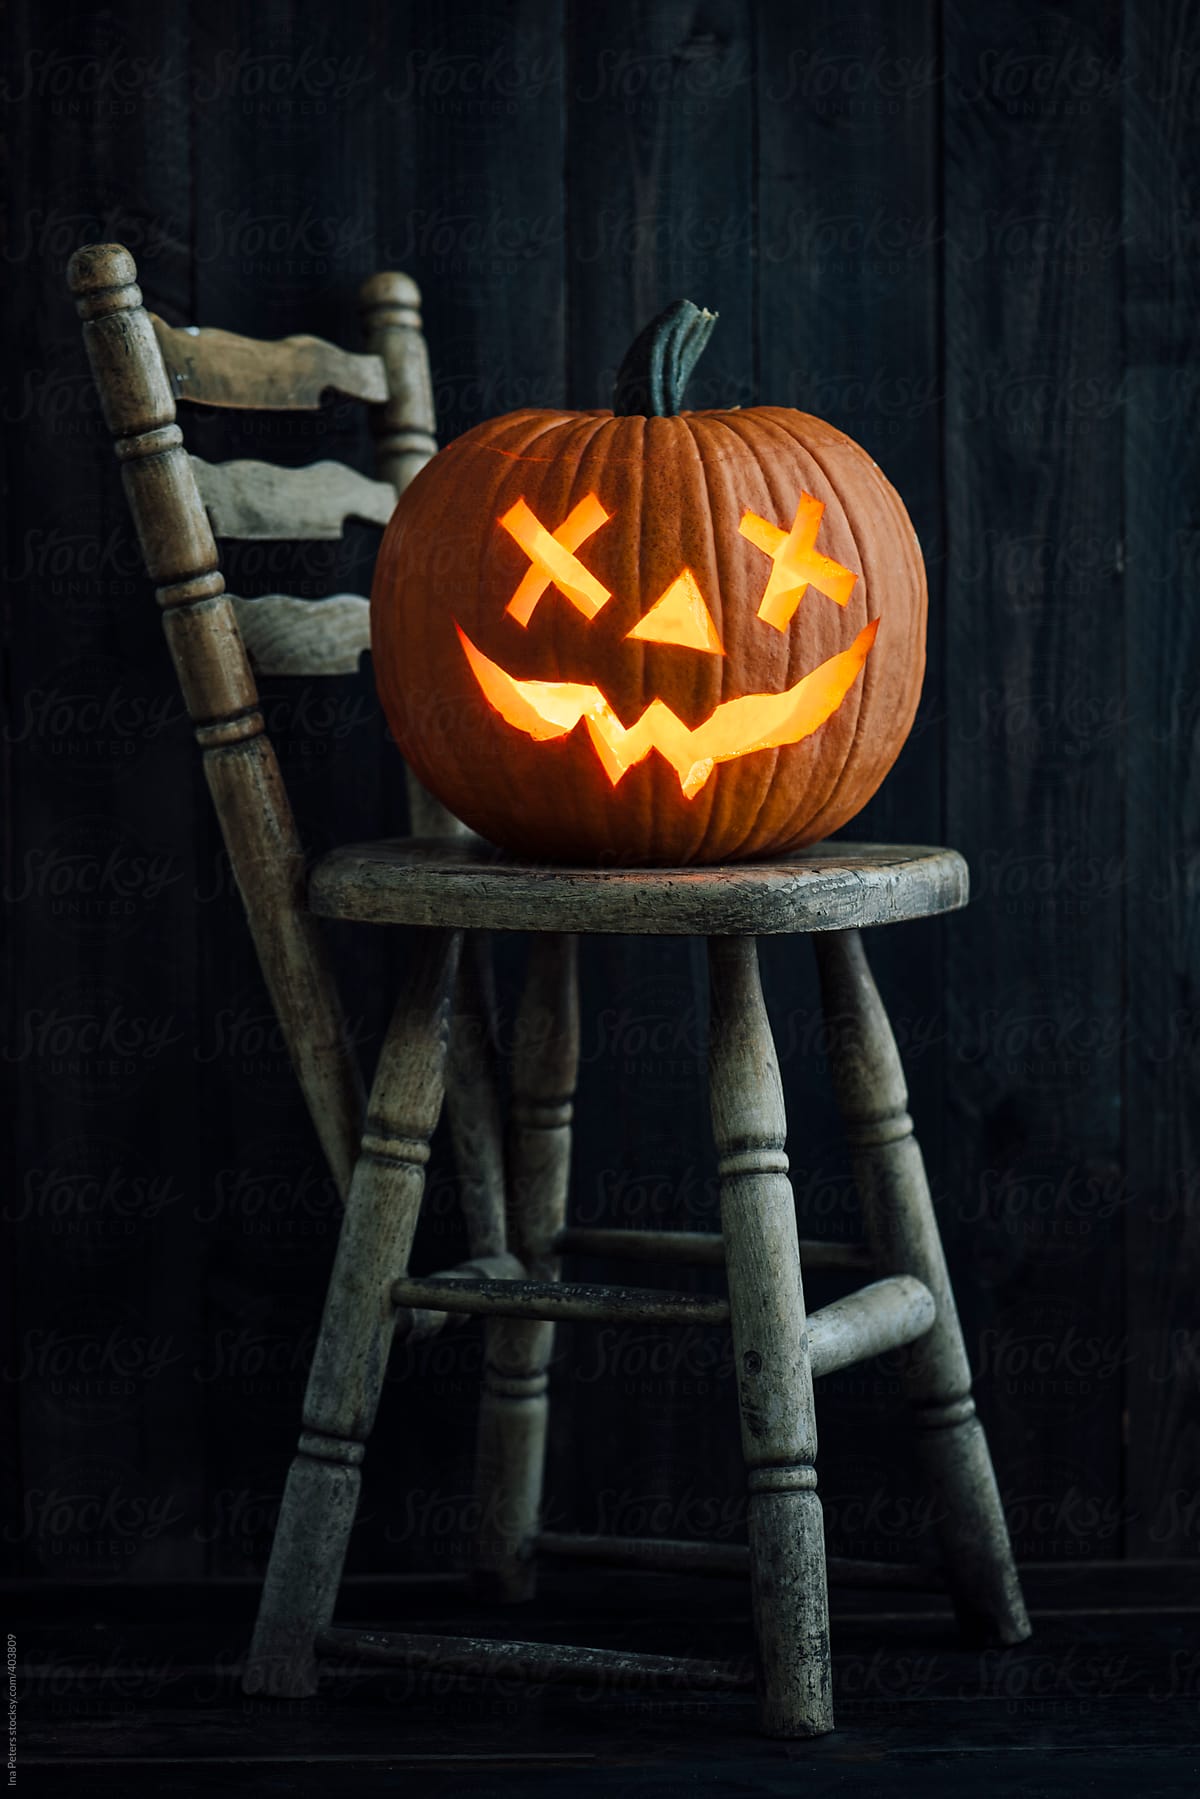 Objects: Halloween Jack-O-Lantern Pumpkin on a chair